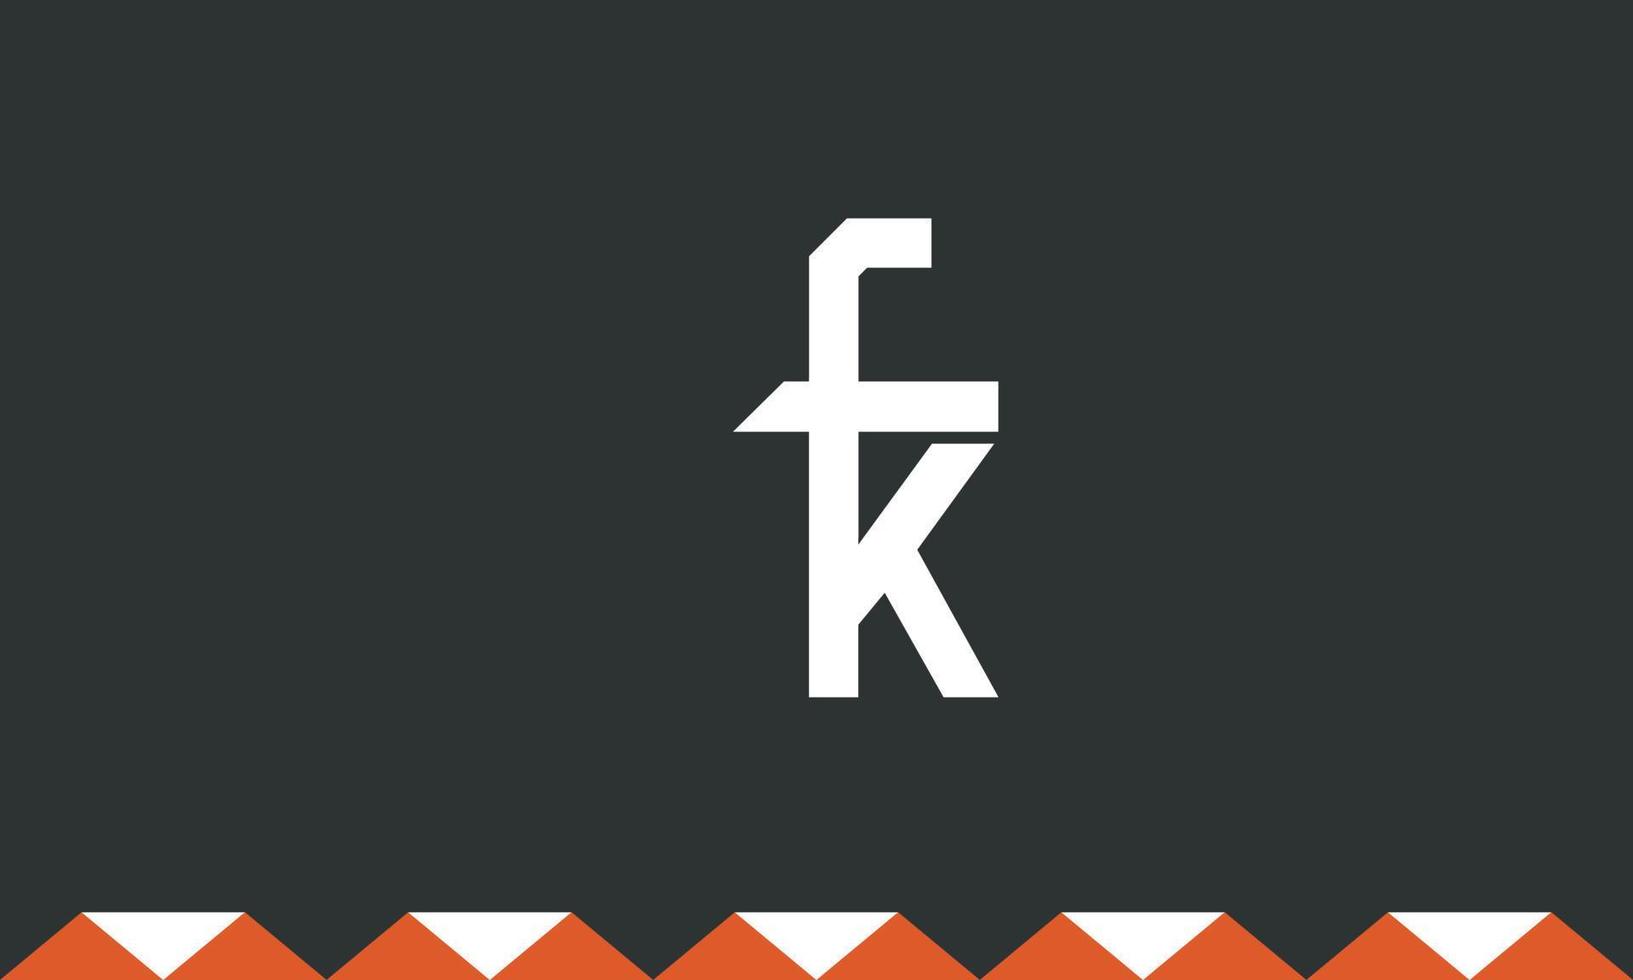 letras do alfabeto iniciais monograma logotipo fk, kf, f e k vetor